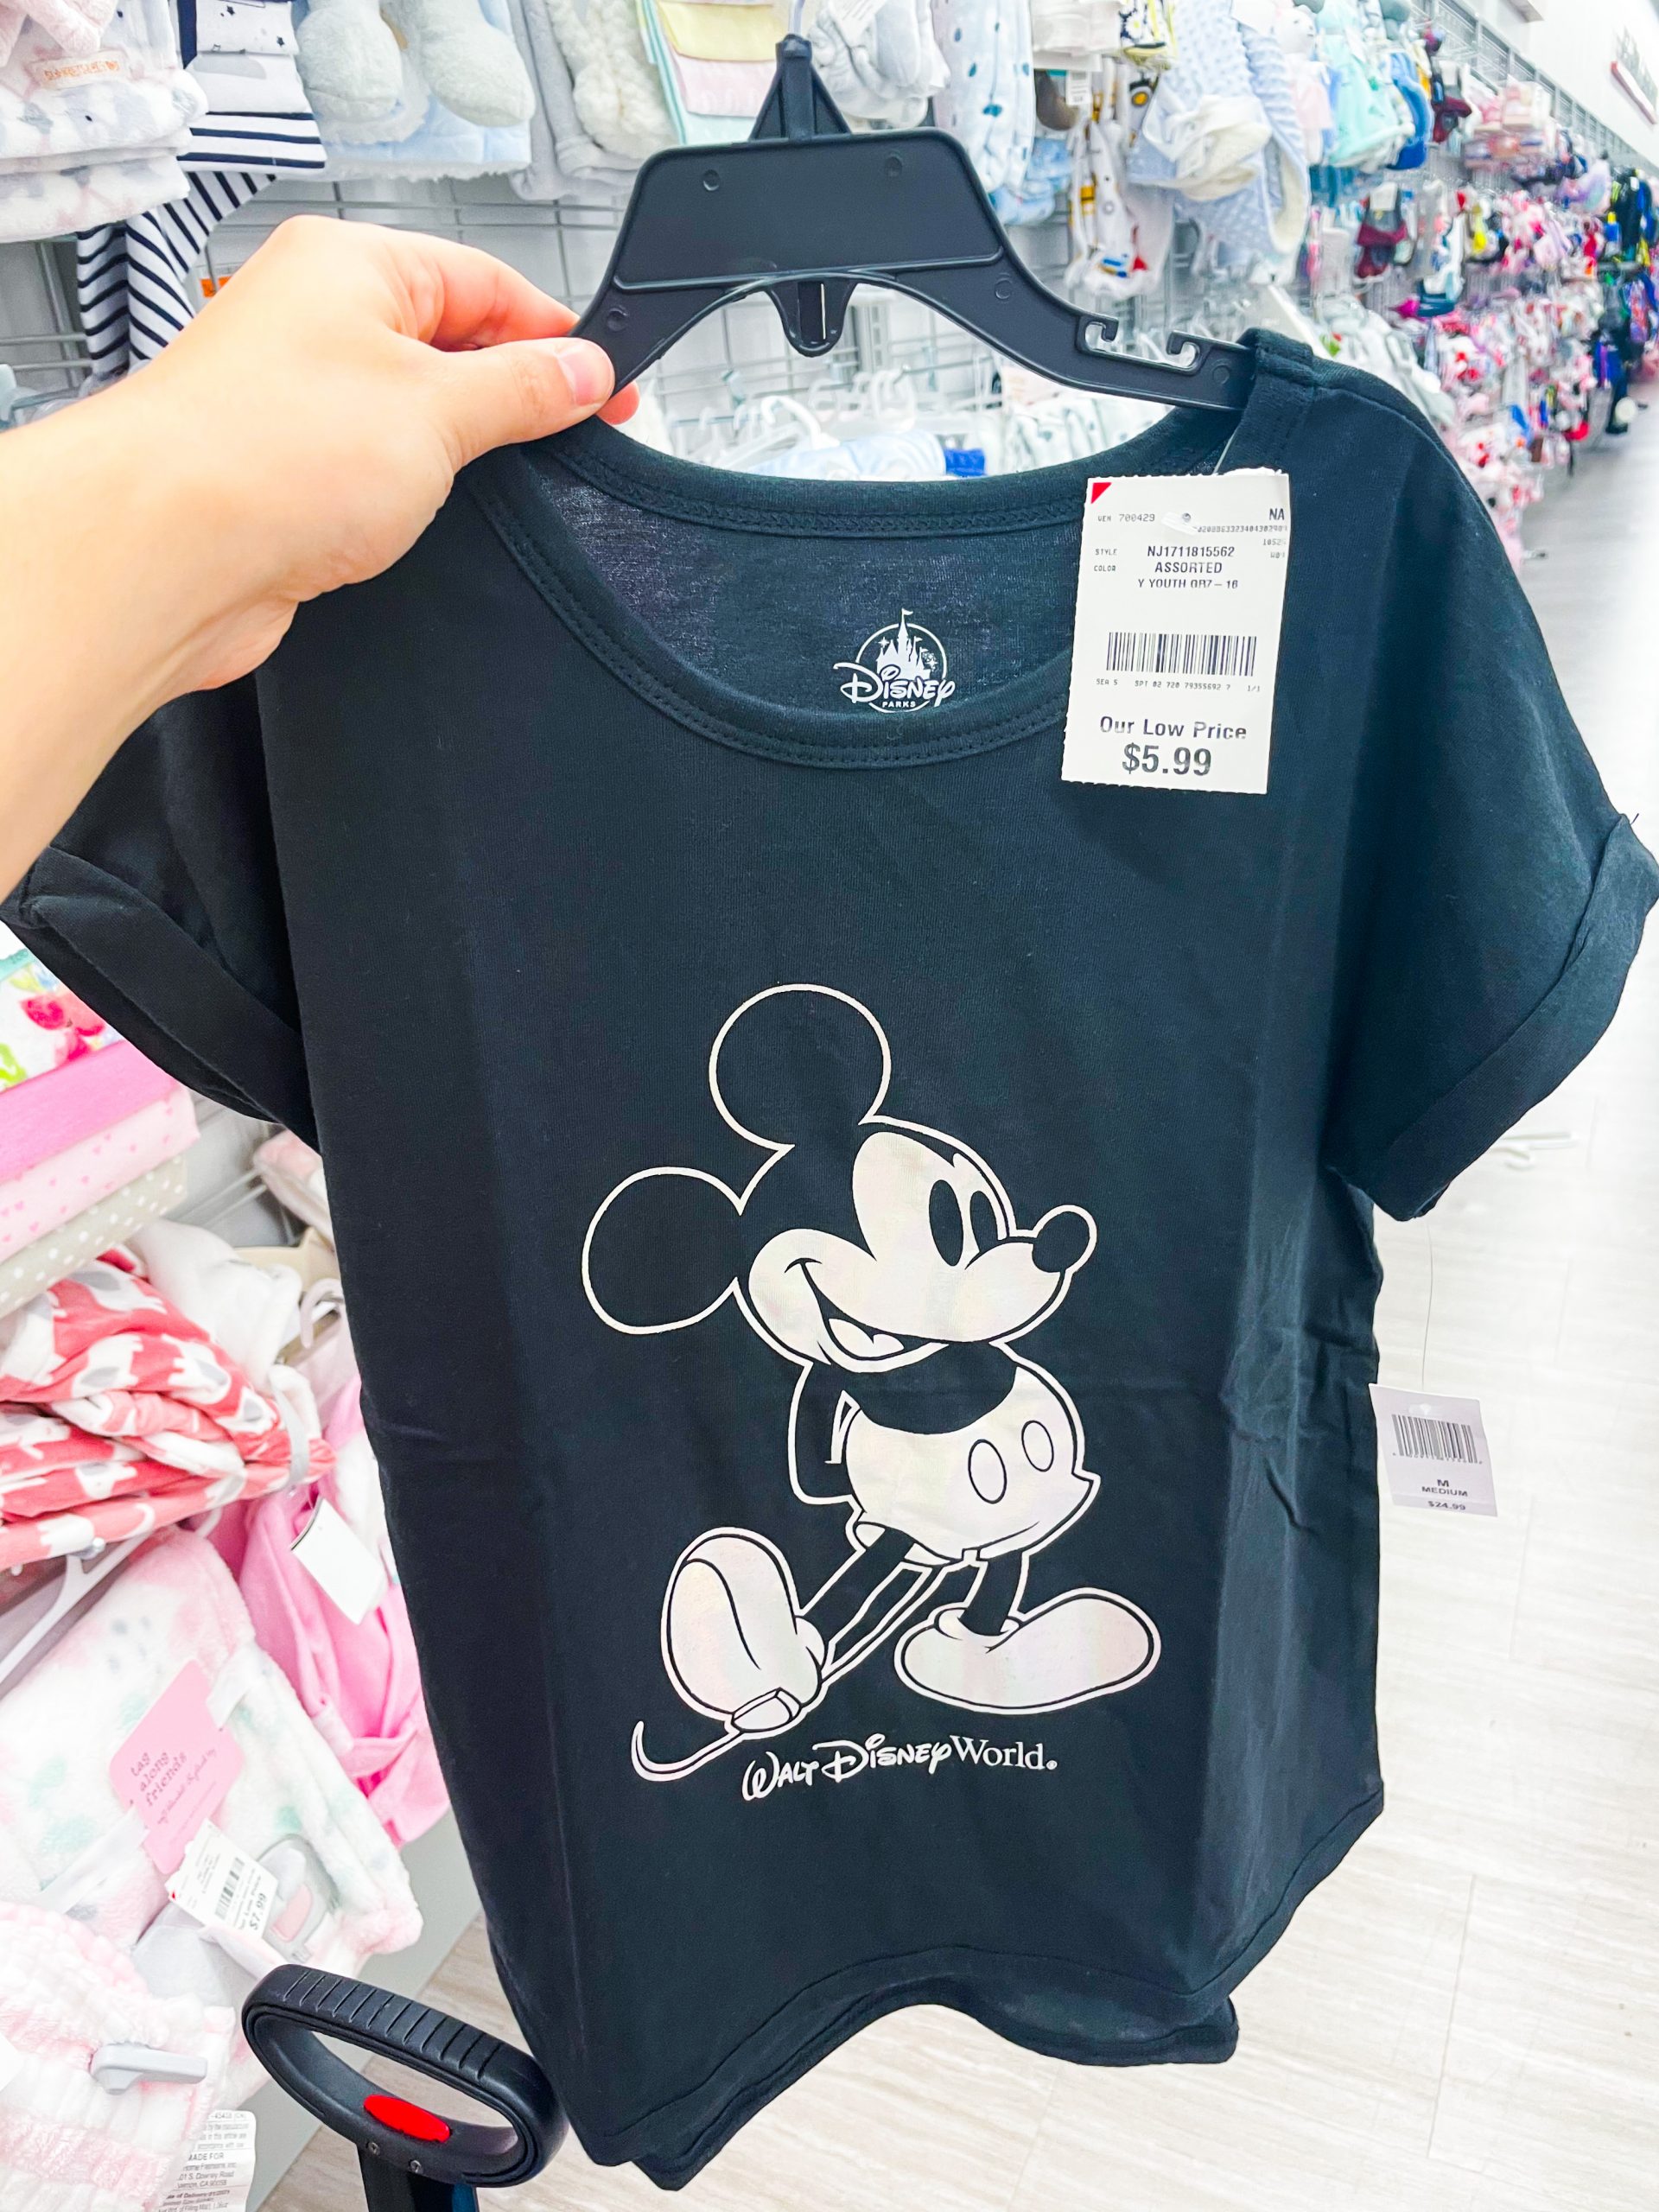 How I Found Disney Parks Merchandise at Burlington